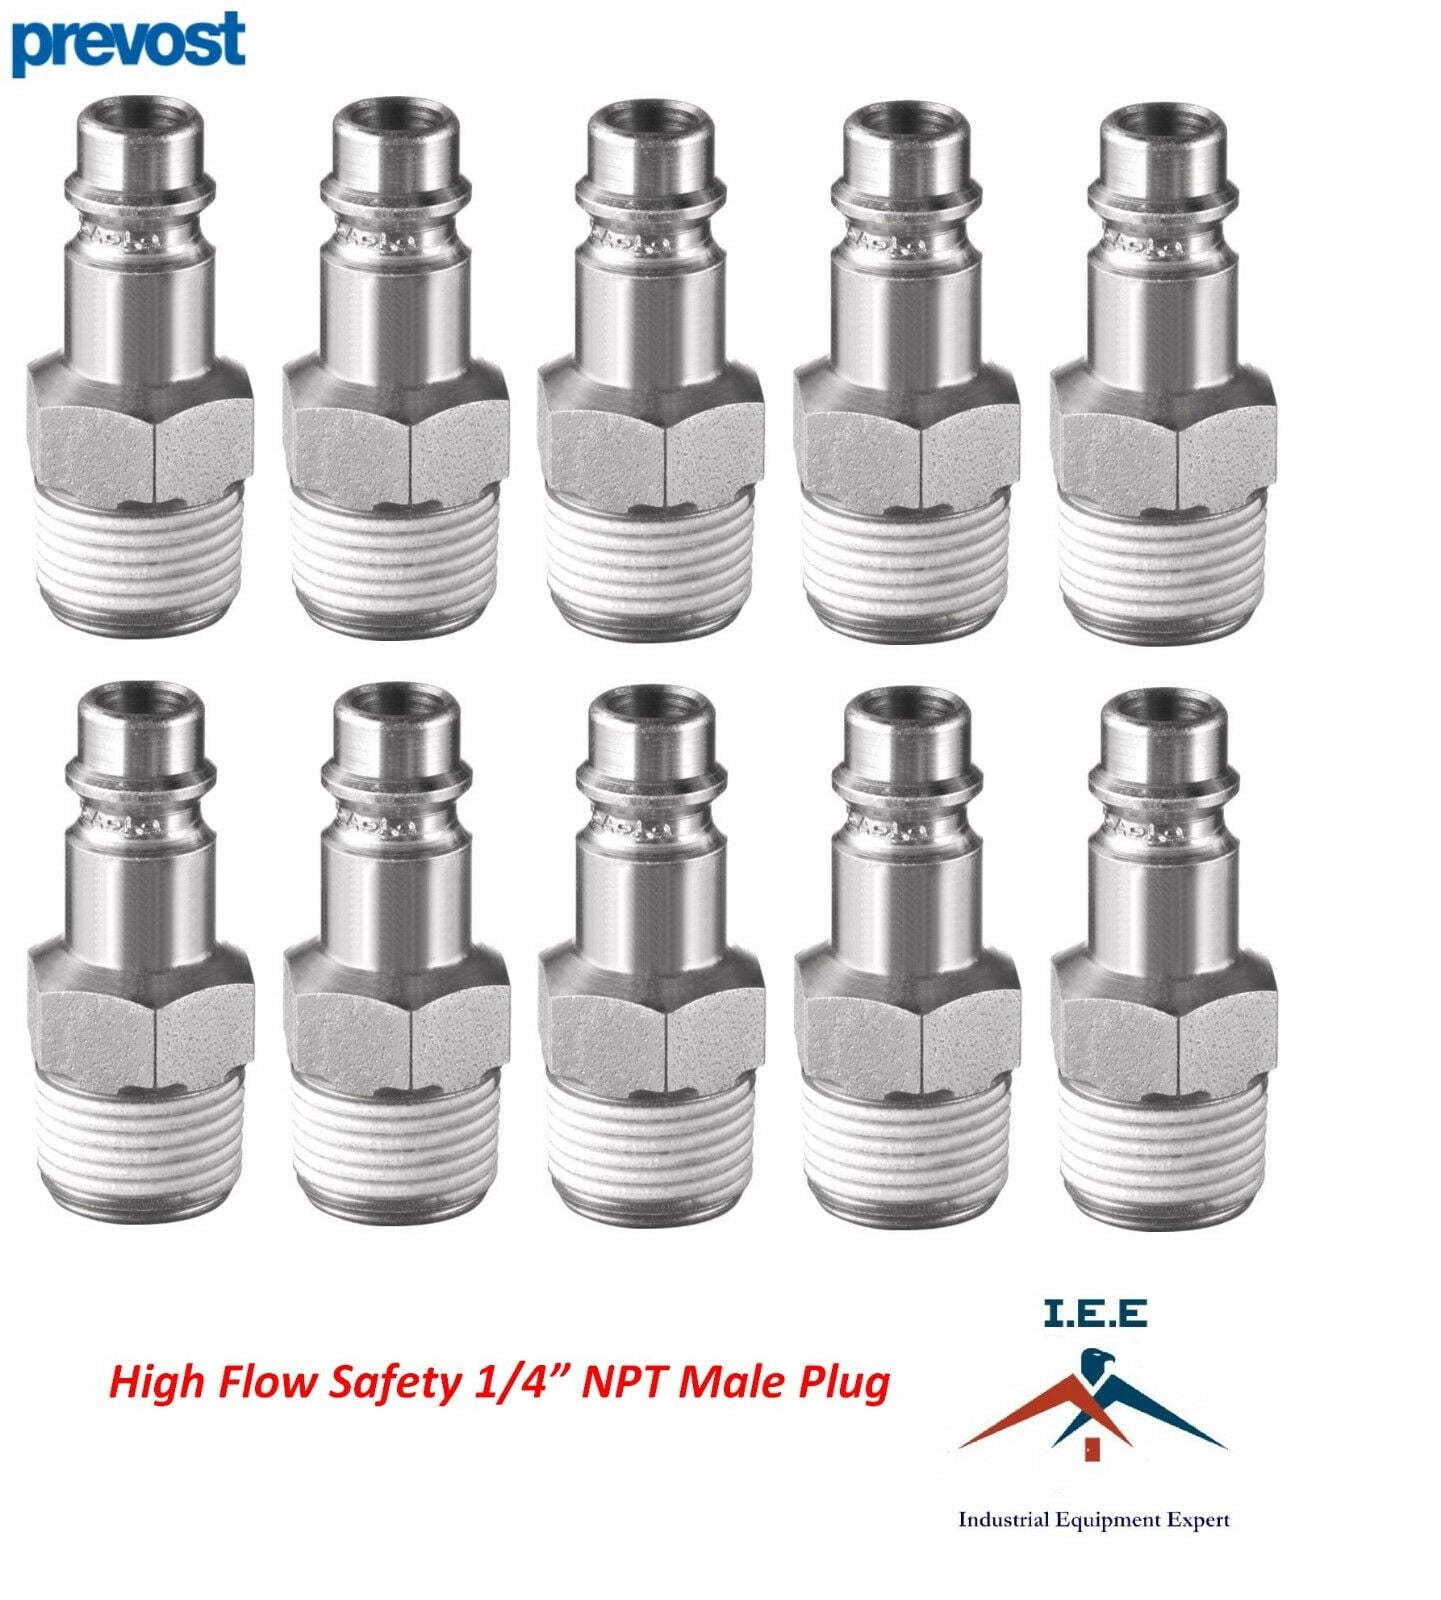 Set 10 Prevost High Quality Safety Air Coupler Plug 1/4" Female NPT Industrial 